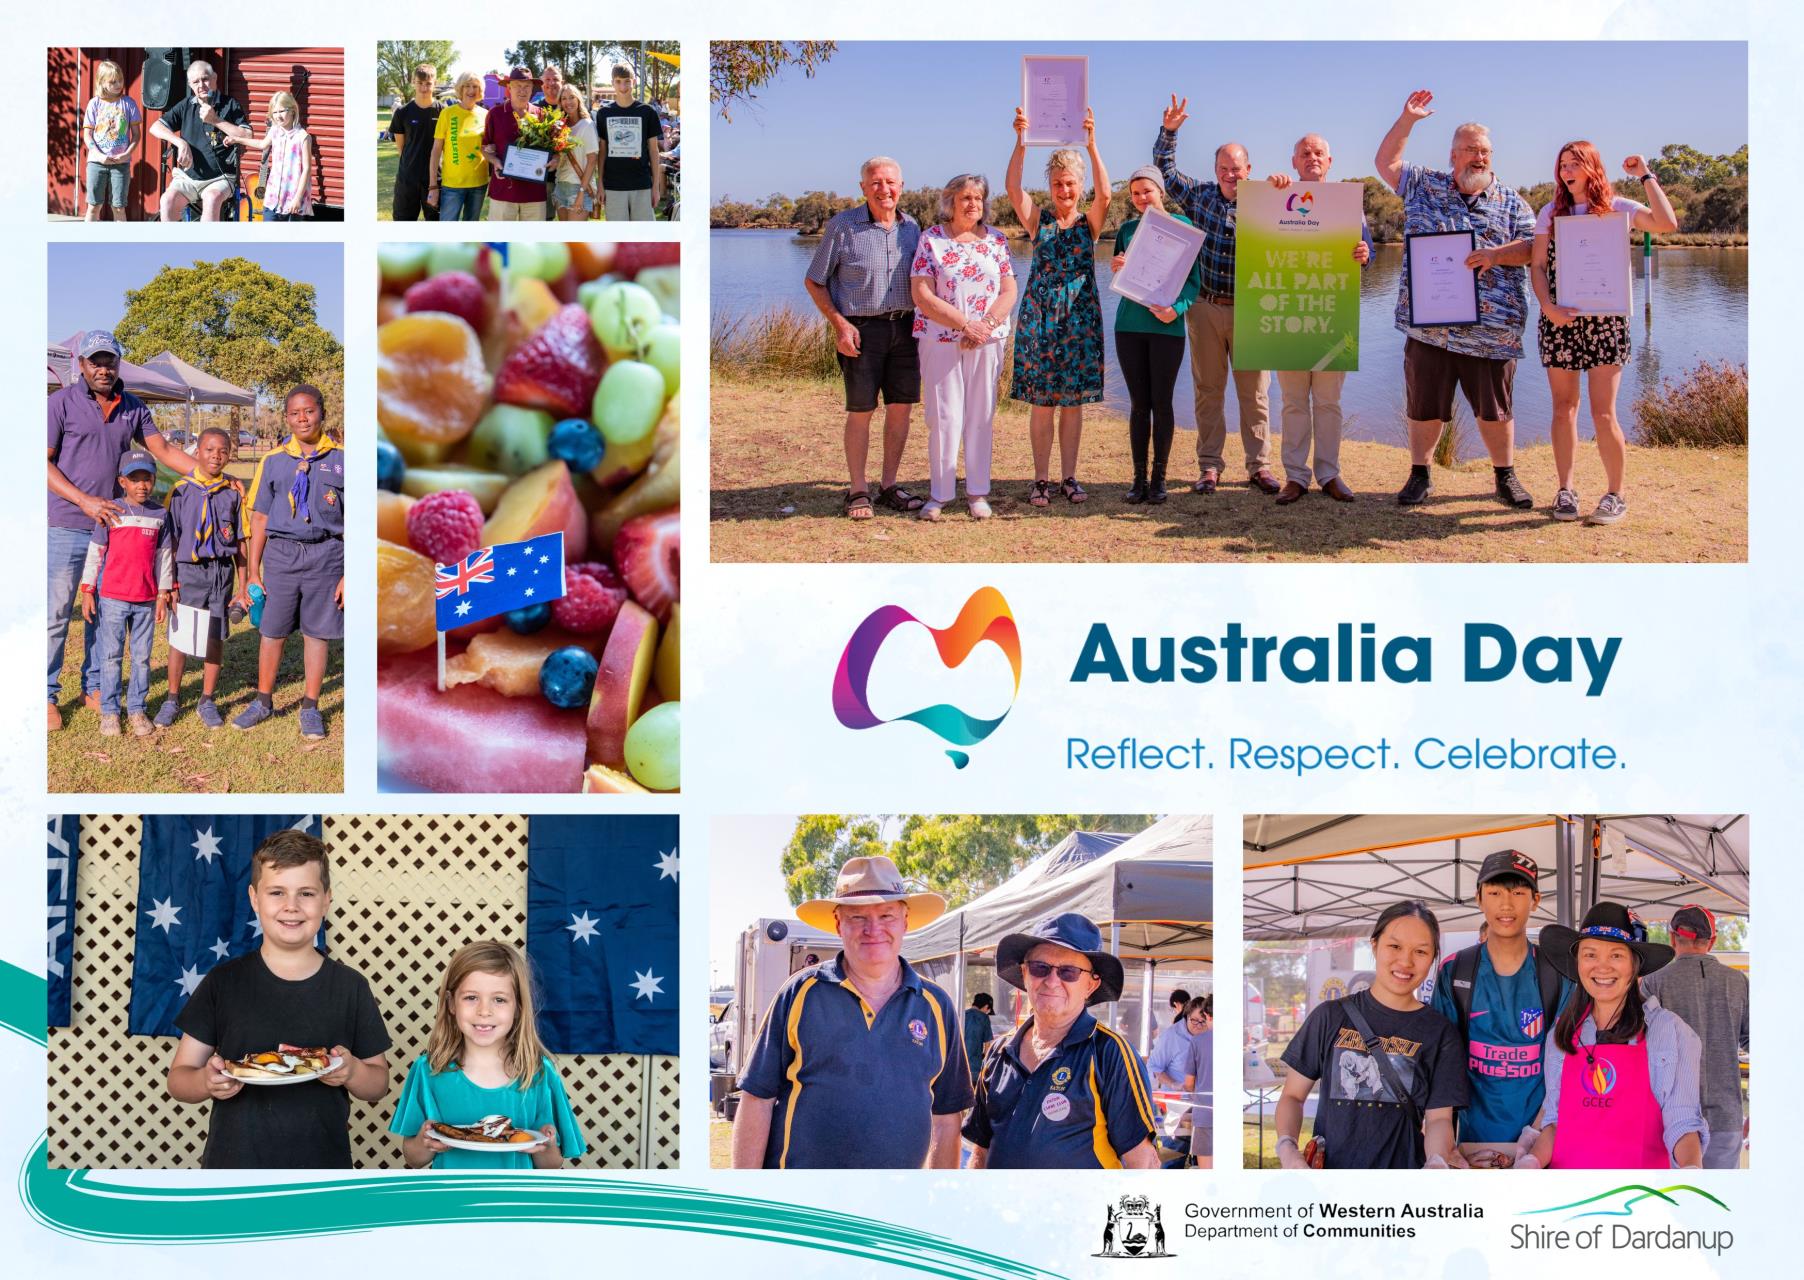 Reflect, respect, celebrate: Australia Day events